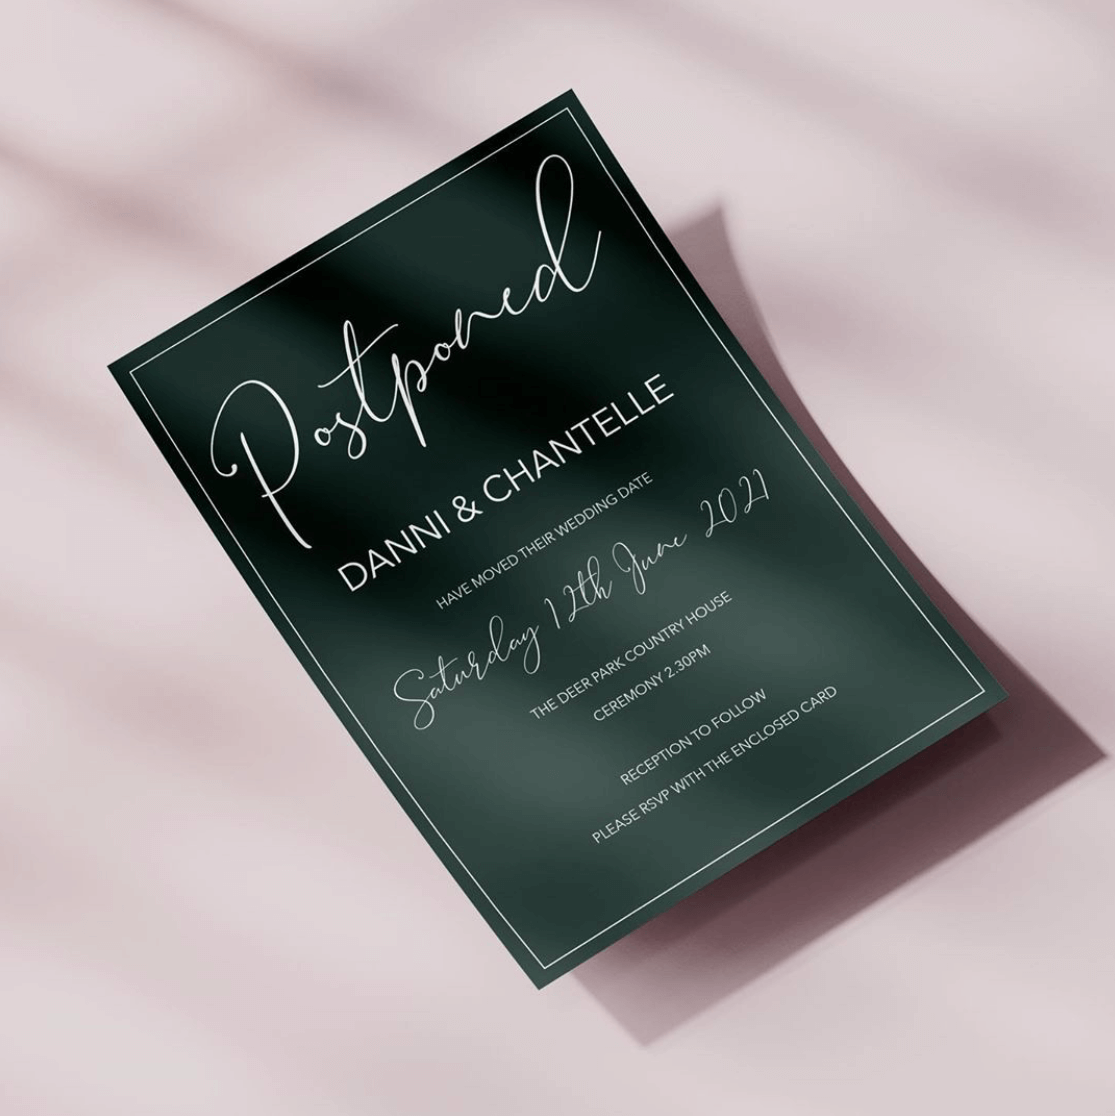 black wedding invitation